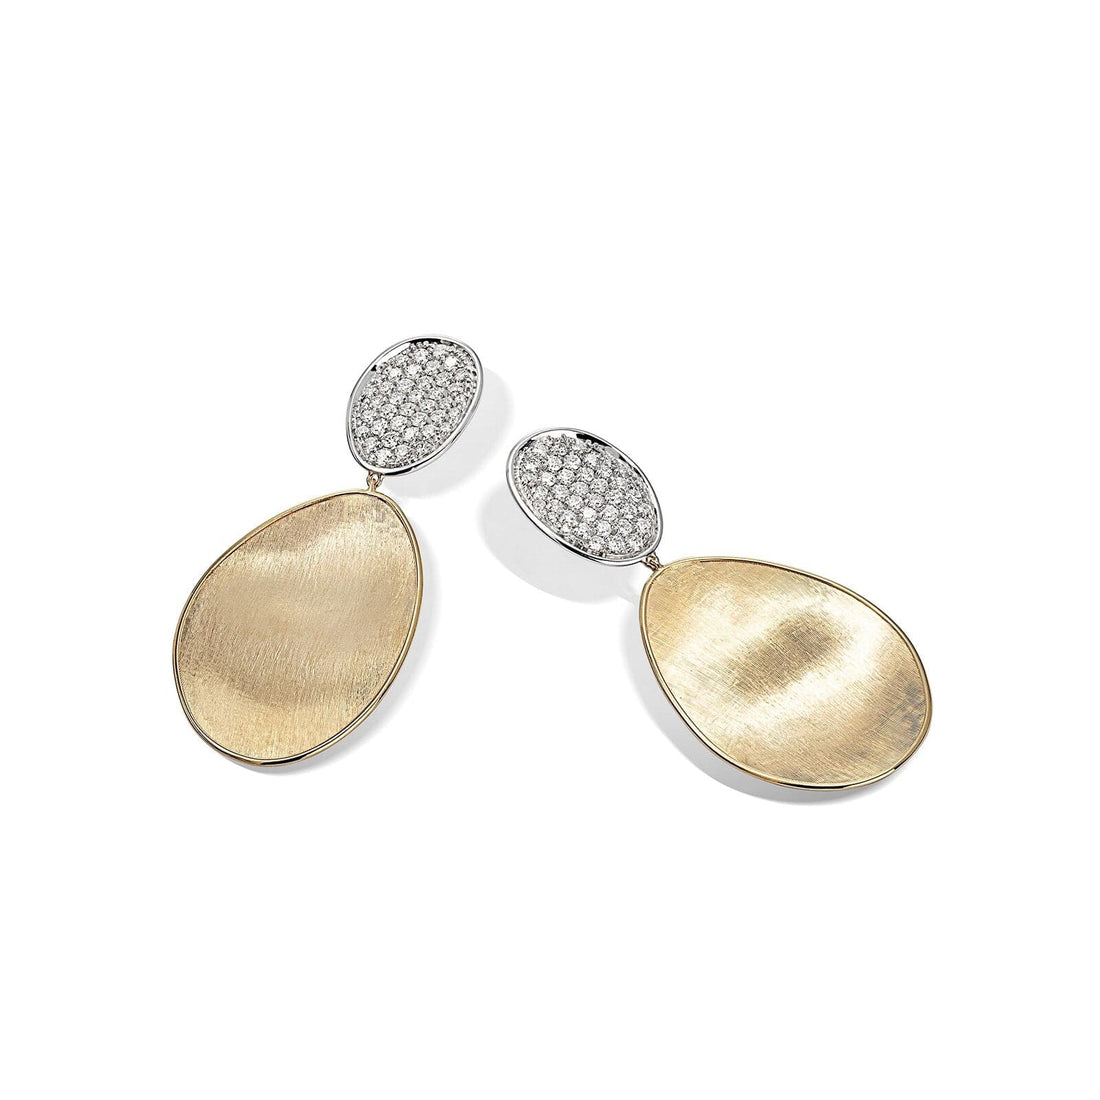 Margo Bicego® 'Lunaria' Yellow Gold Earrings - Skeie's Jewelers